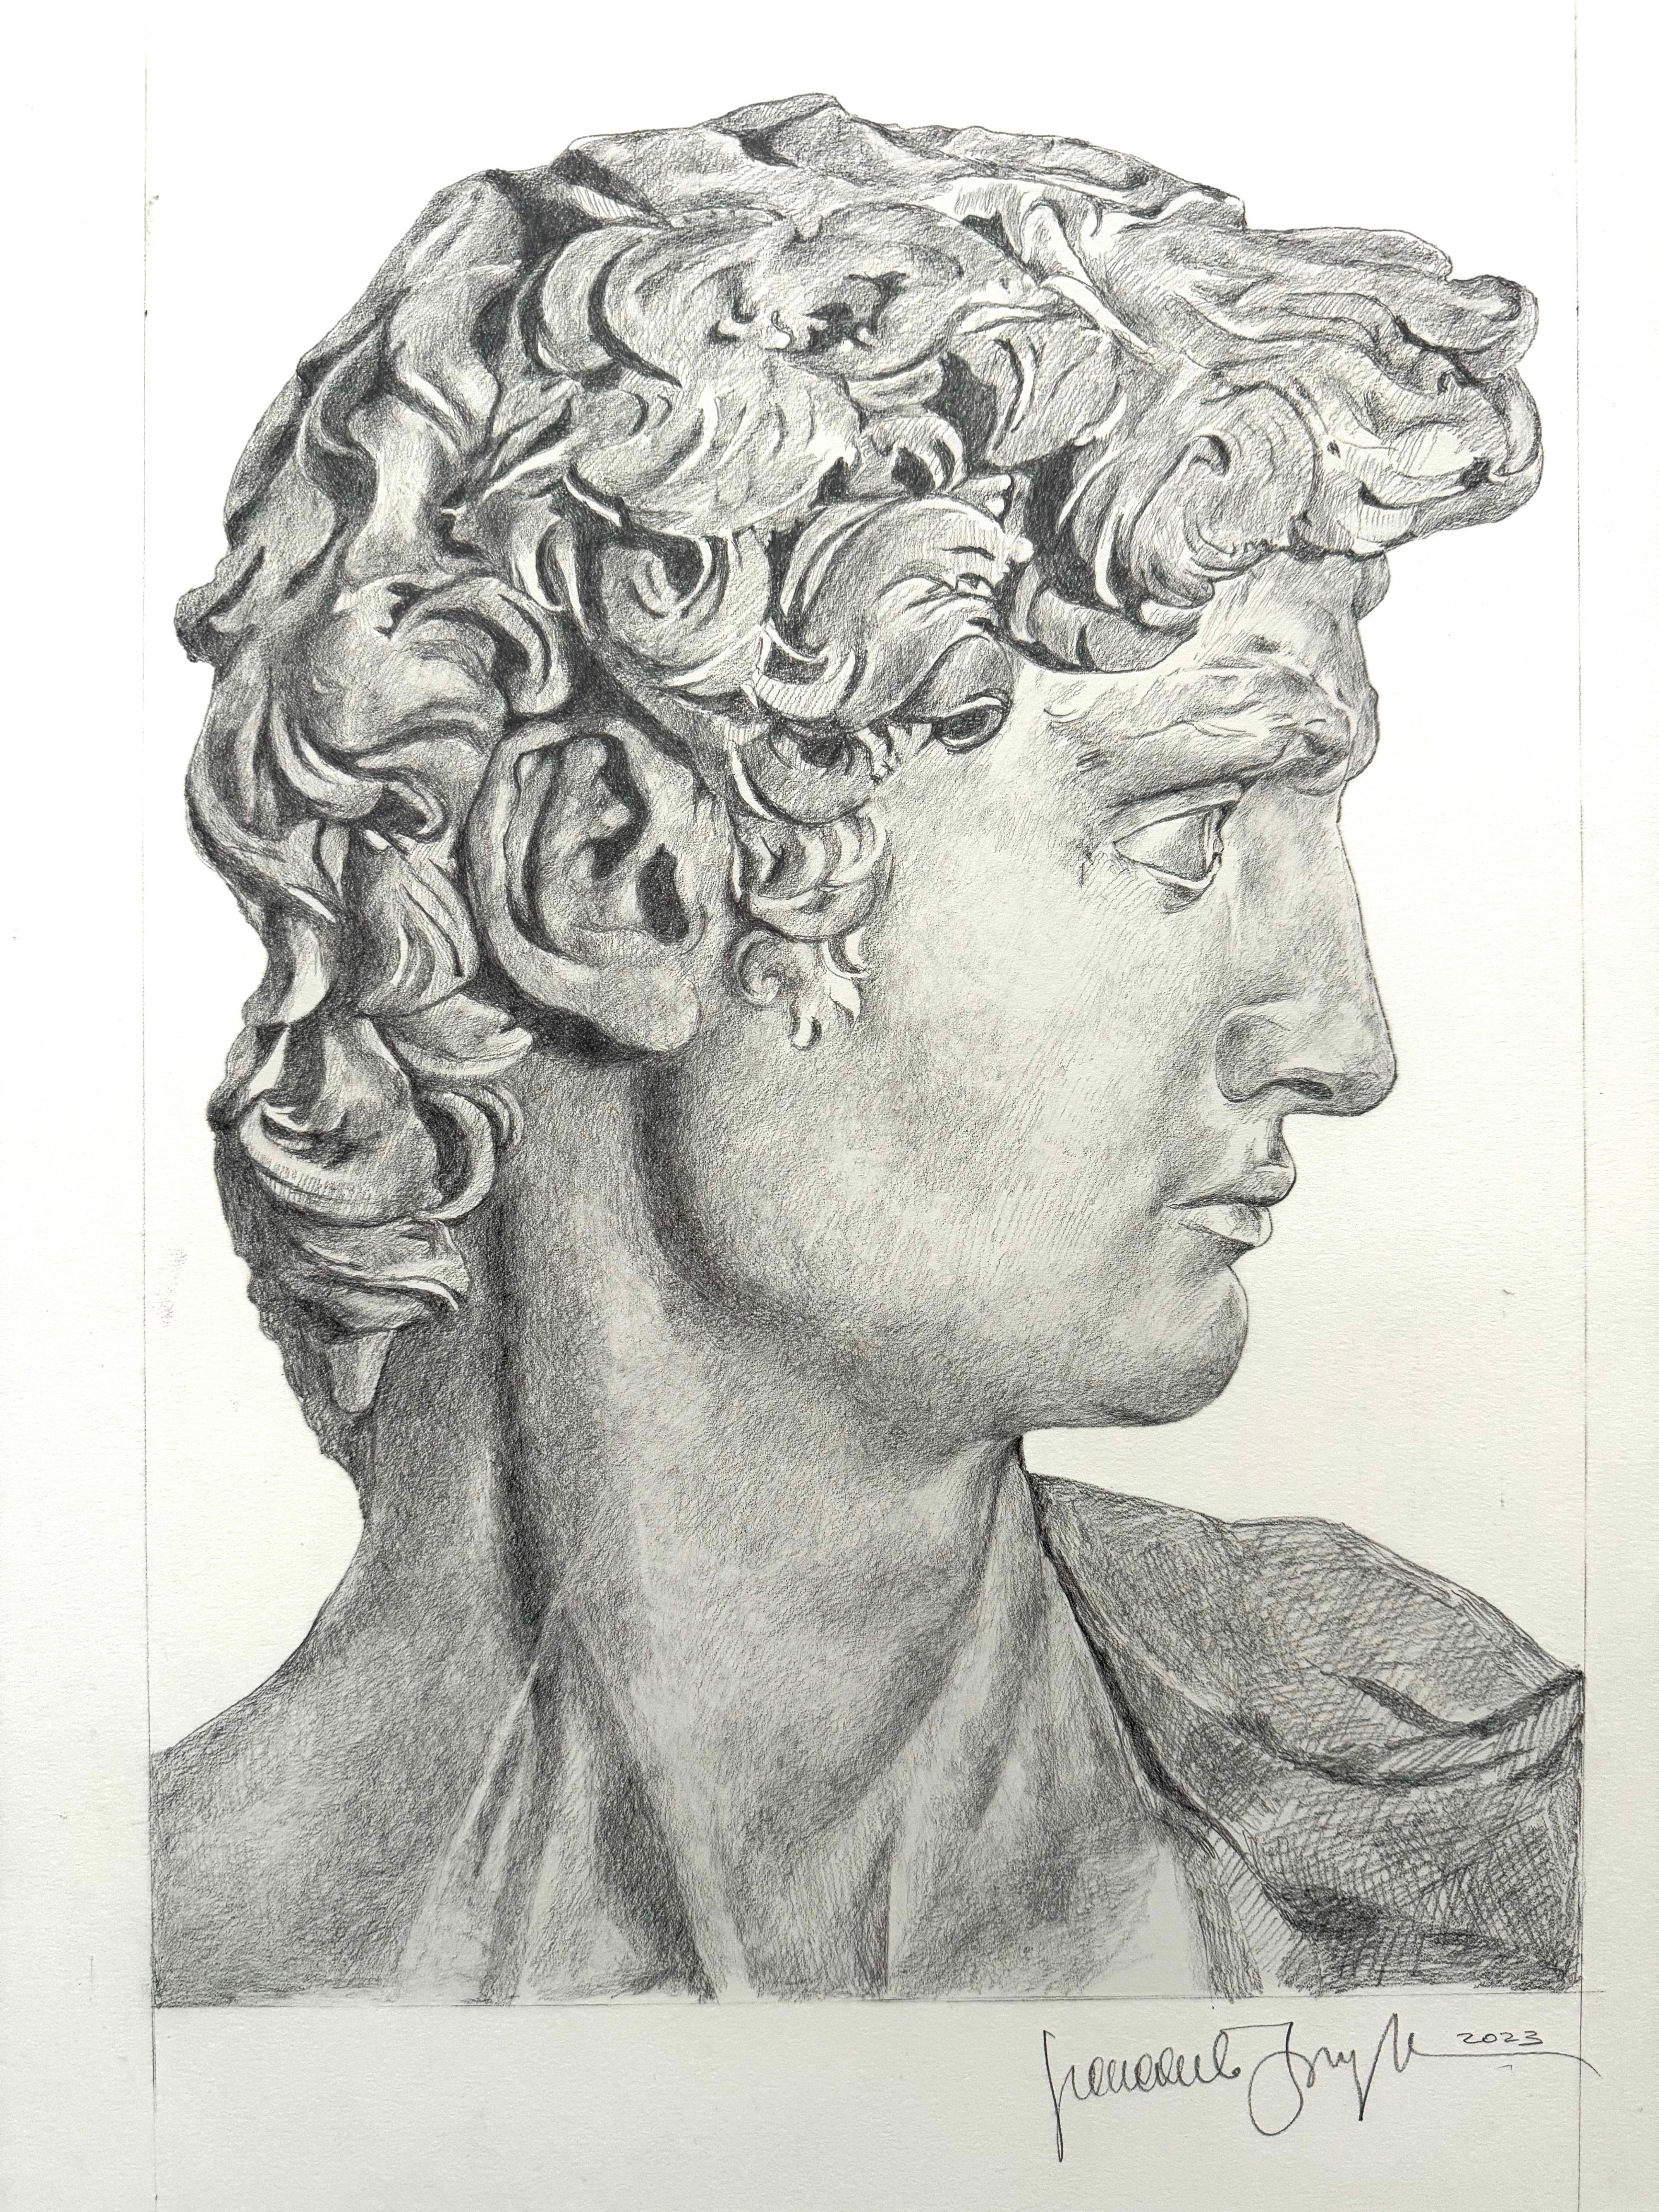 Giancarlo Impiglia Nude - Incredible sketch of Michelangelo's David